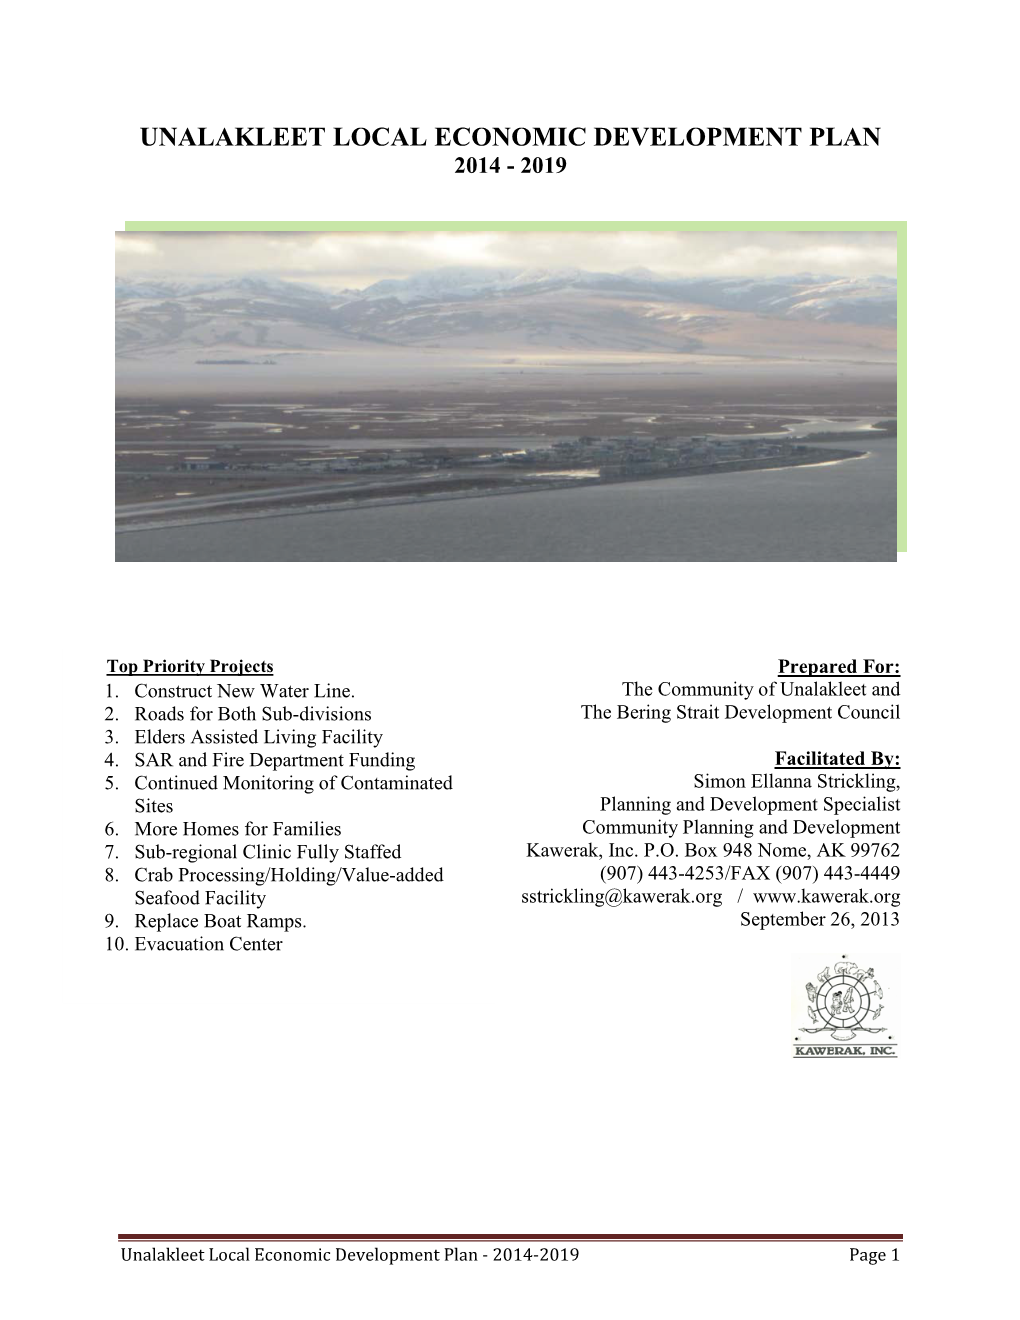 Unalakleet Local Economic Development Plan 2014 - 2019